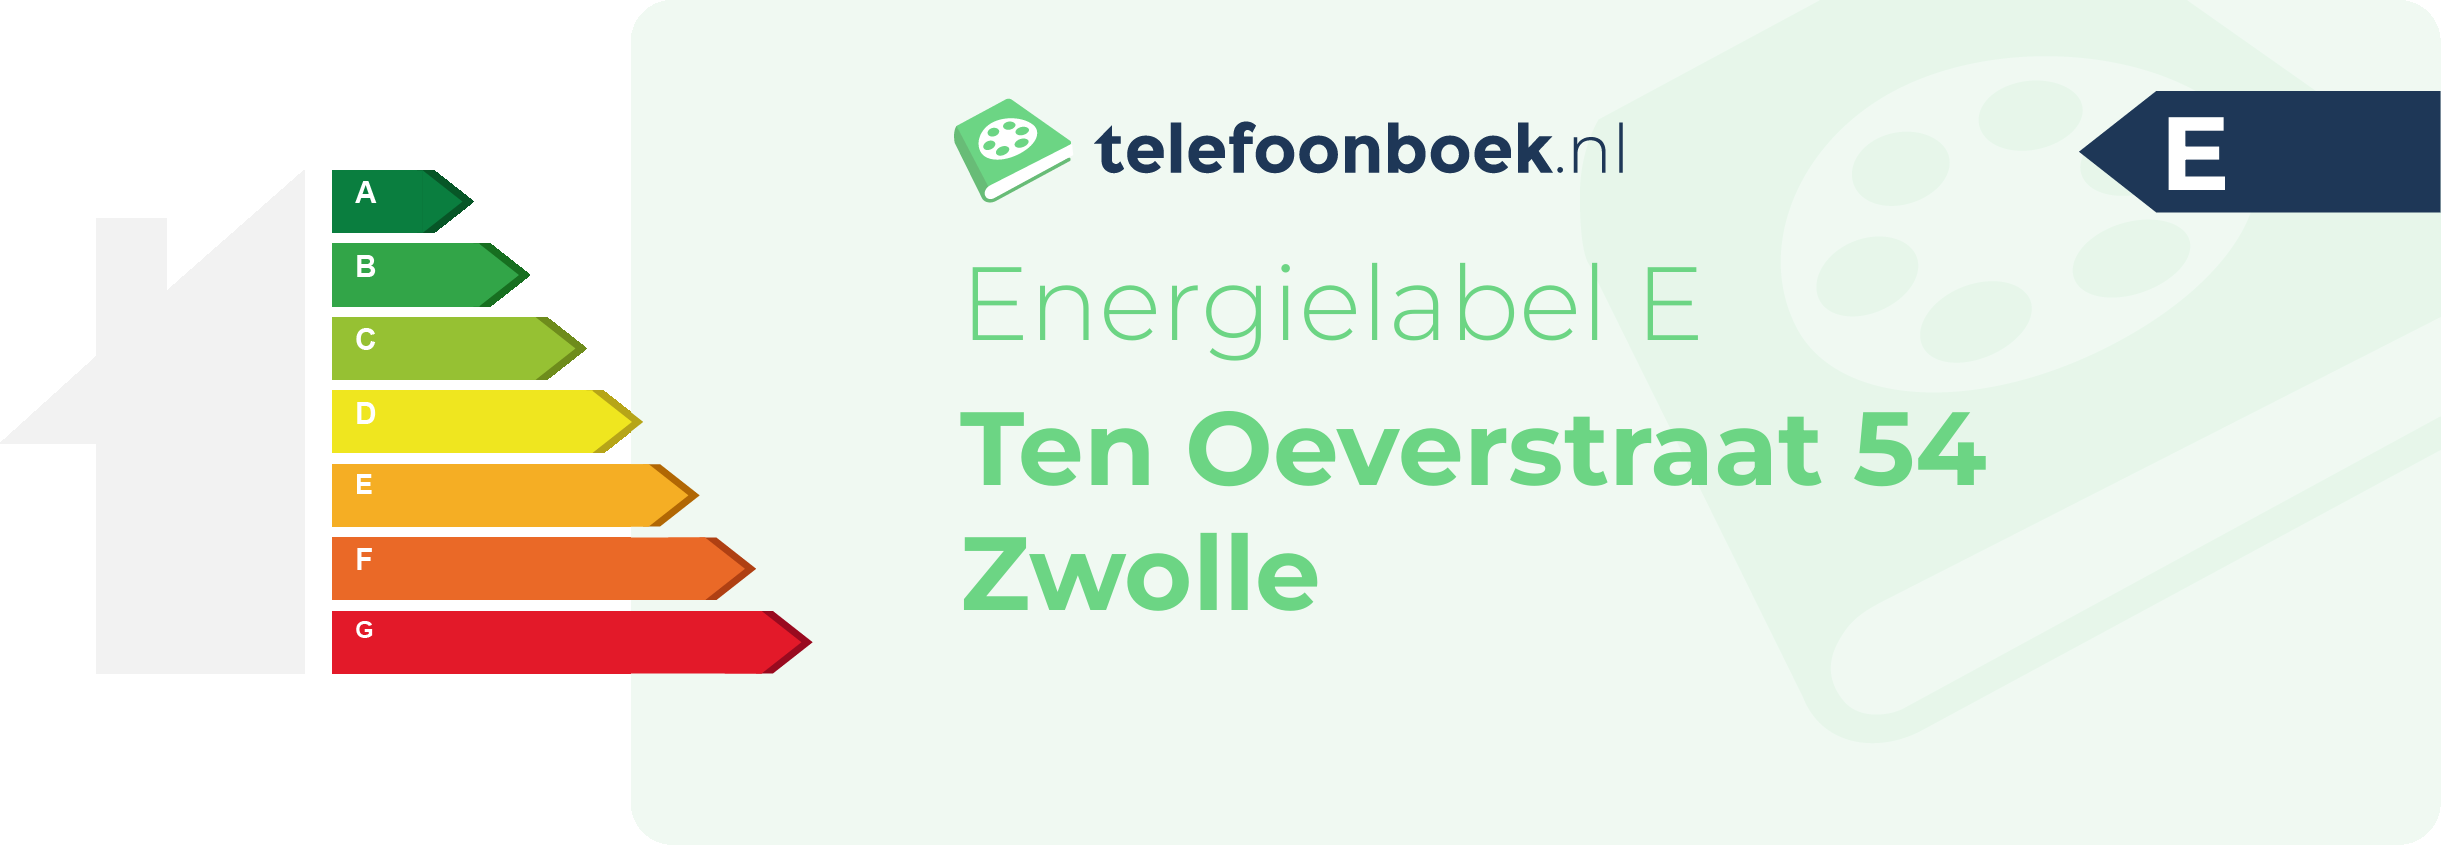 Energielabel Ten Oeverstraat 54 Zwolle